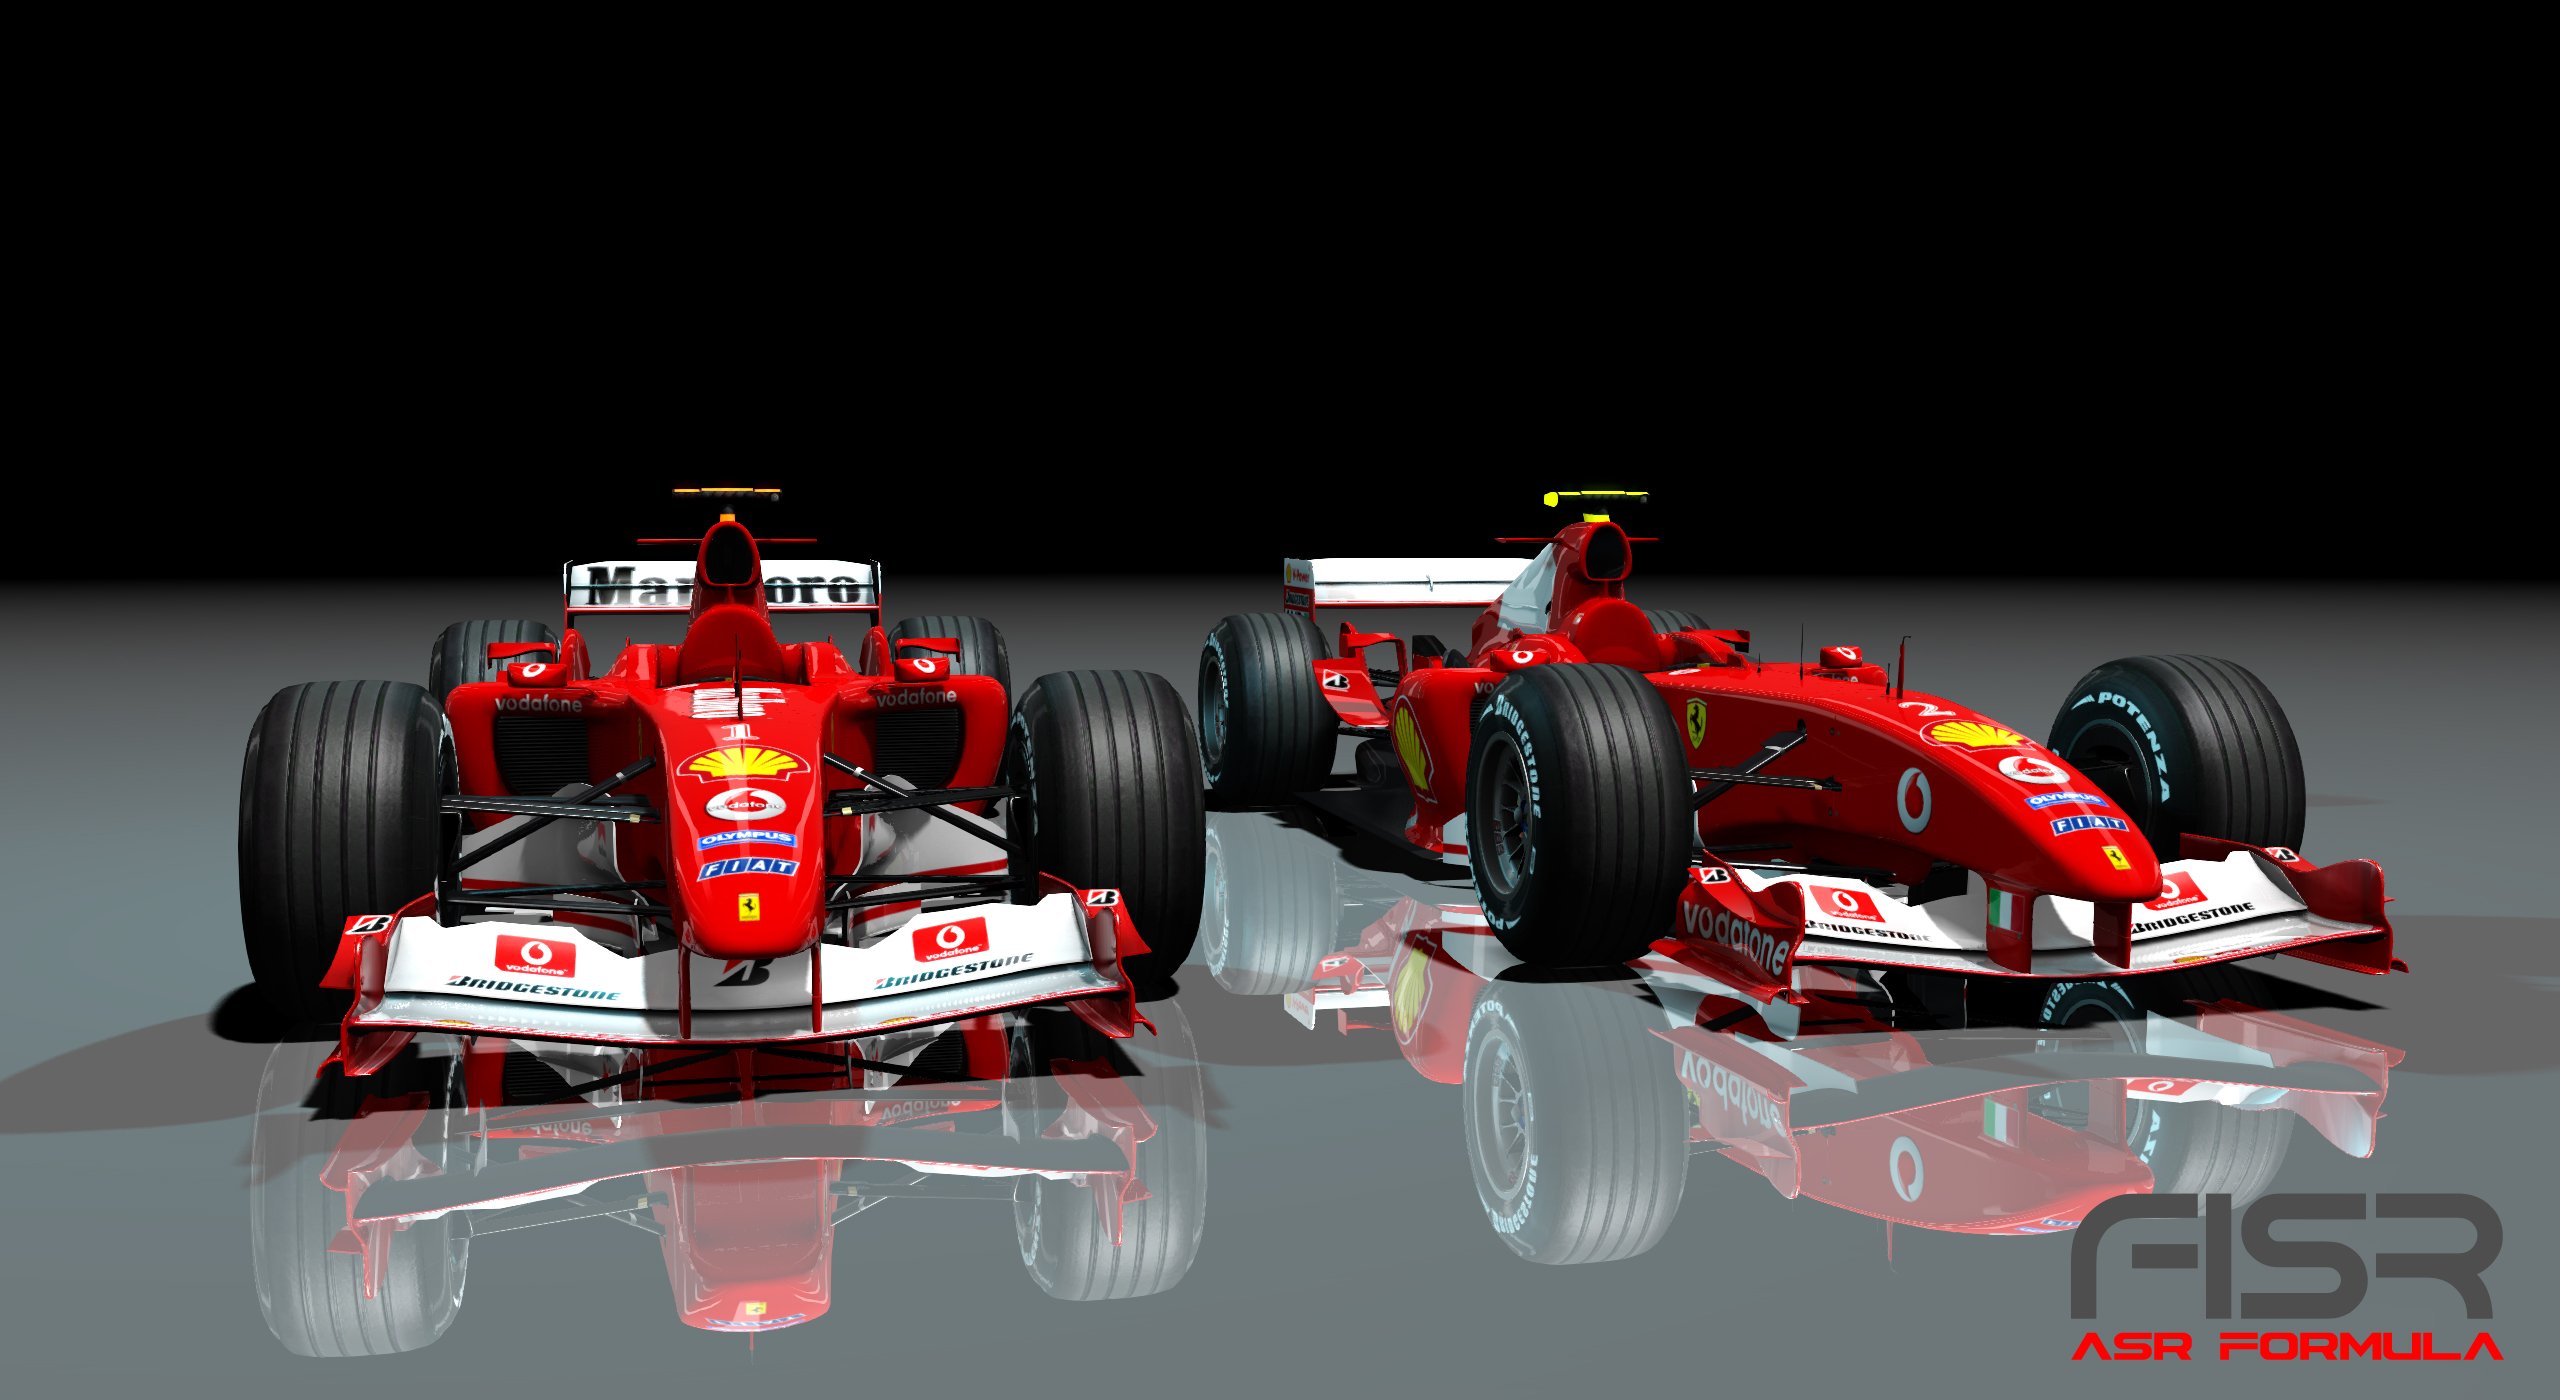 More information about "Assetto Corsa: Ferrari F2004 v1.0 by ASR Formula"